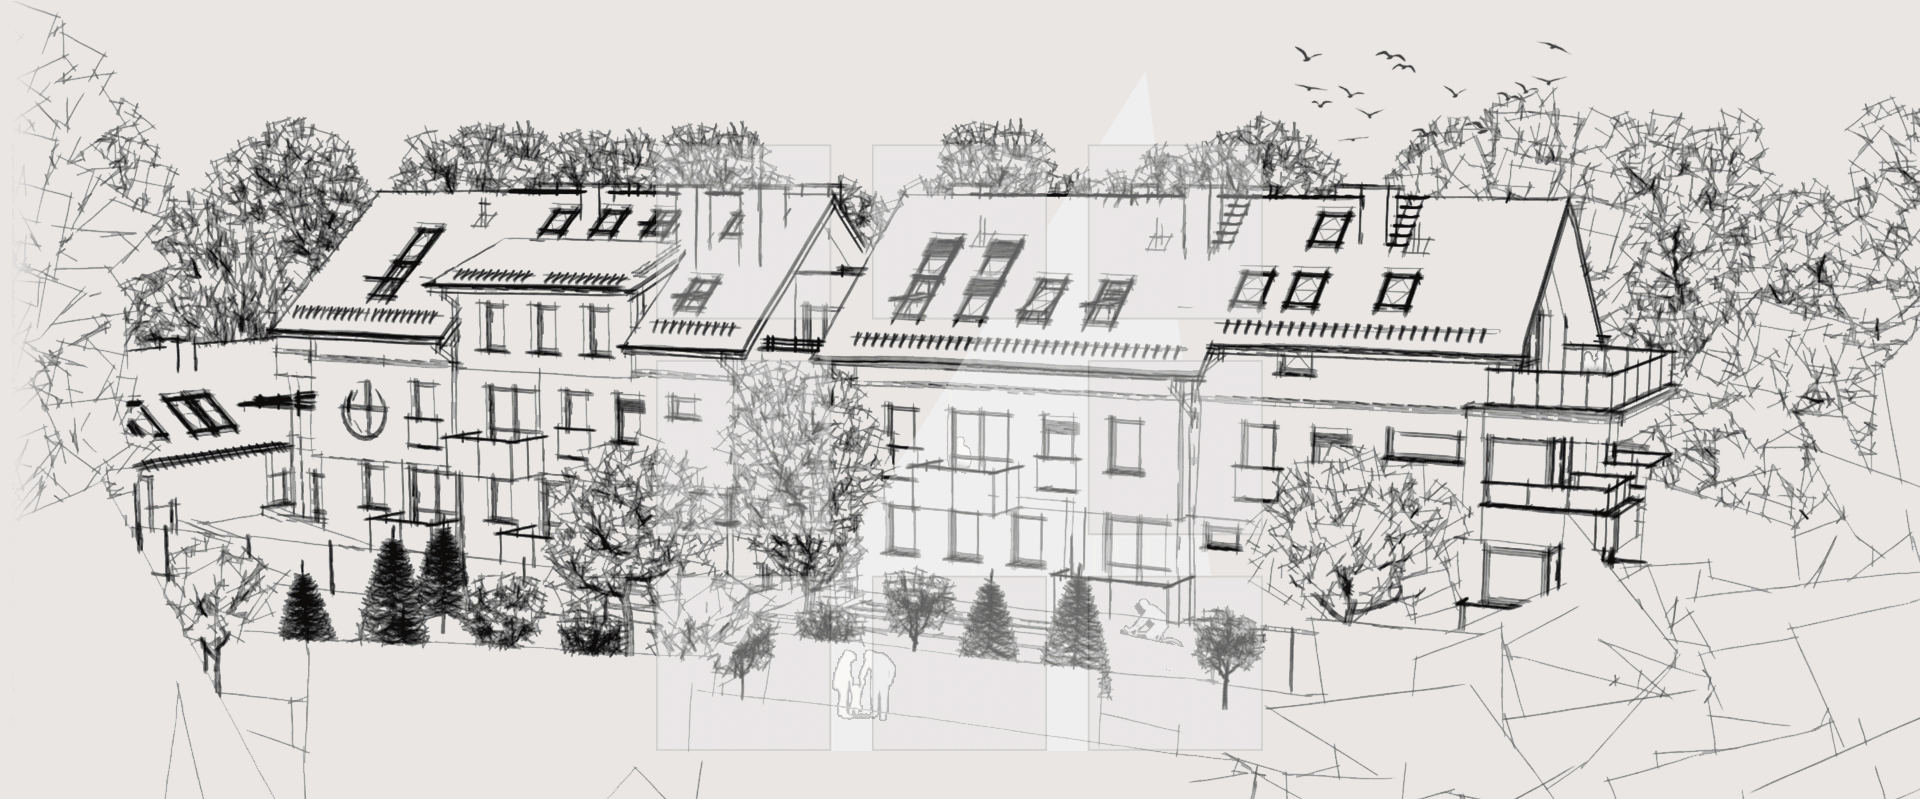 Visualisation of the new design of the Biuro Projektowe - Furmanek Aleksander - a multi-family residential building located in Toruń-Podgórz